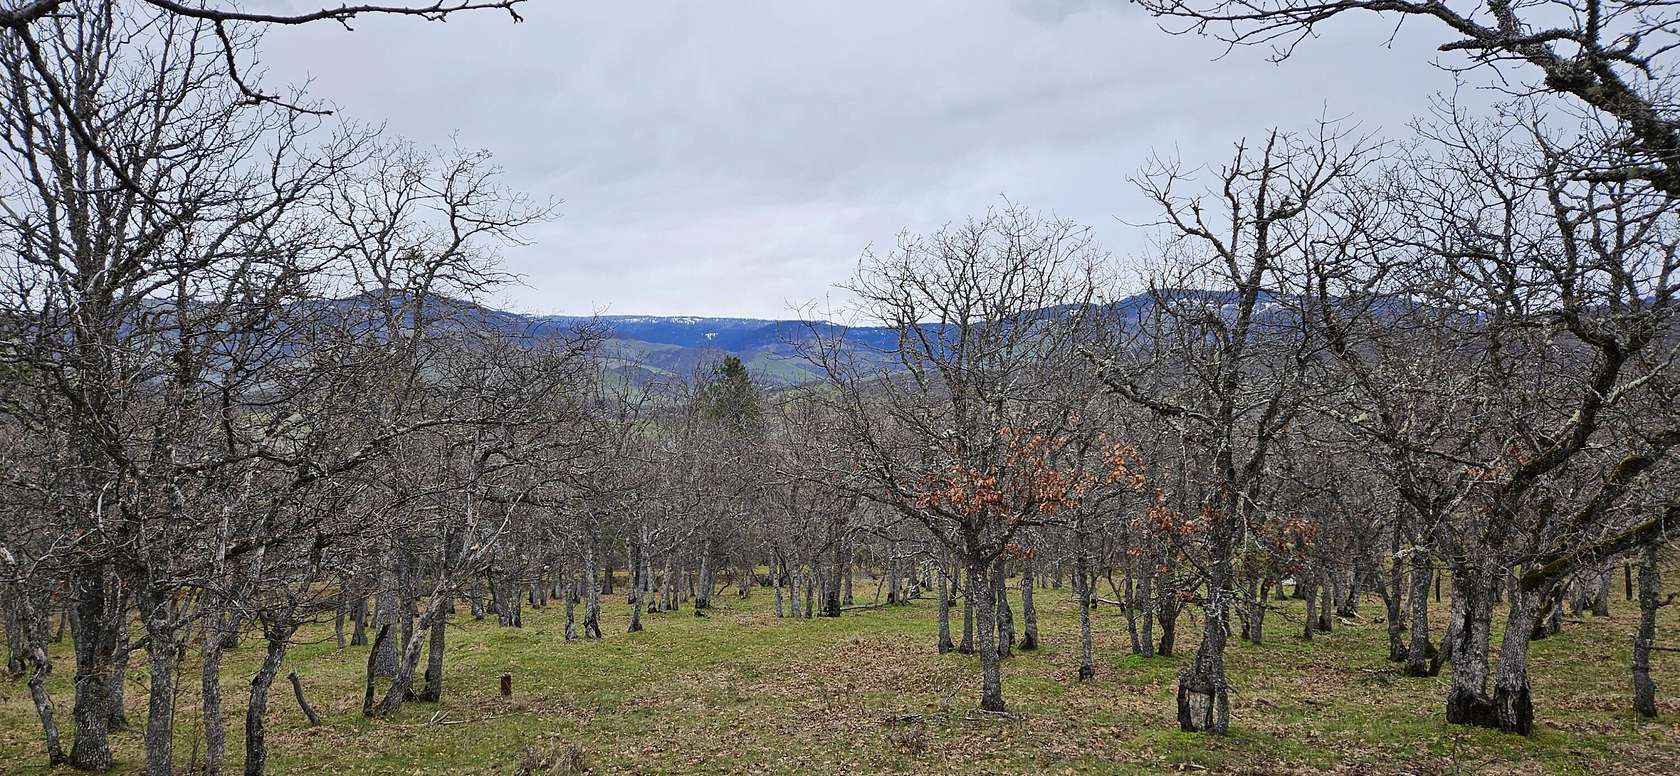 24 Acres of Agricultural Land for Sale in Ashland, Oregon